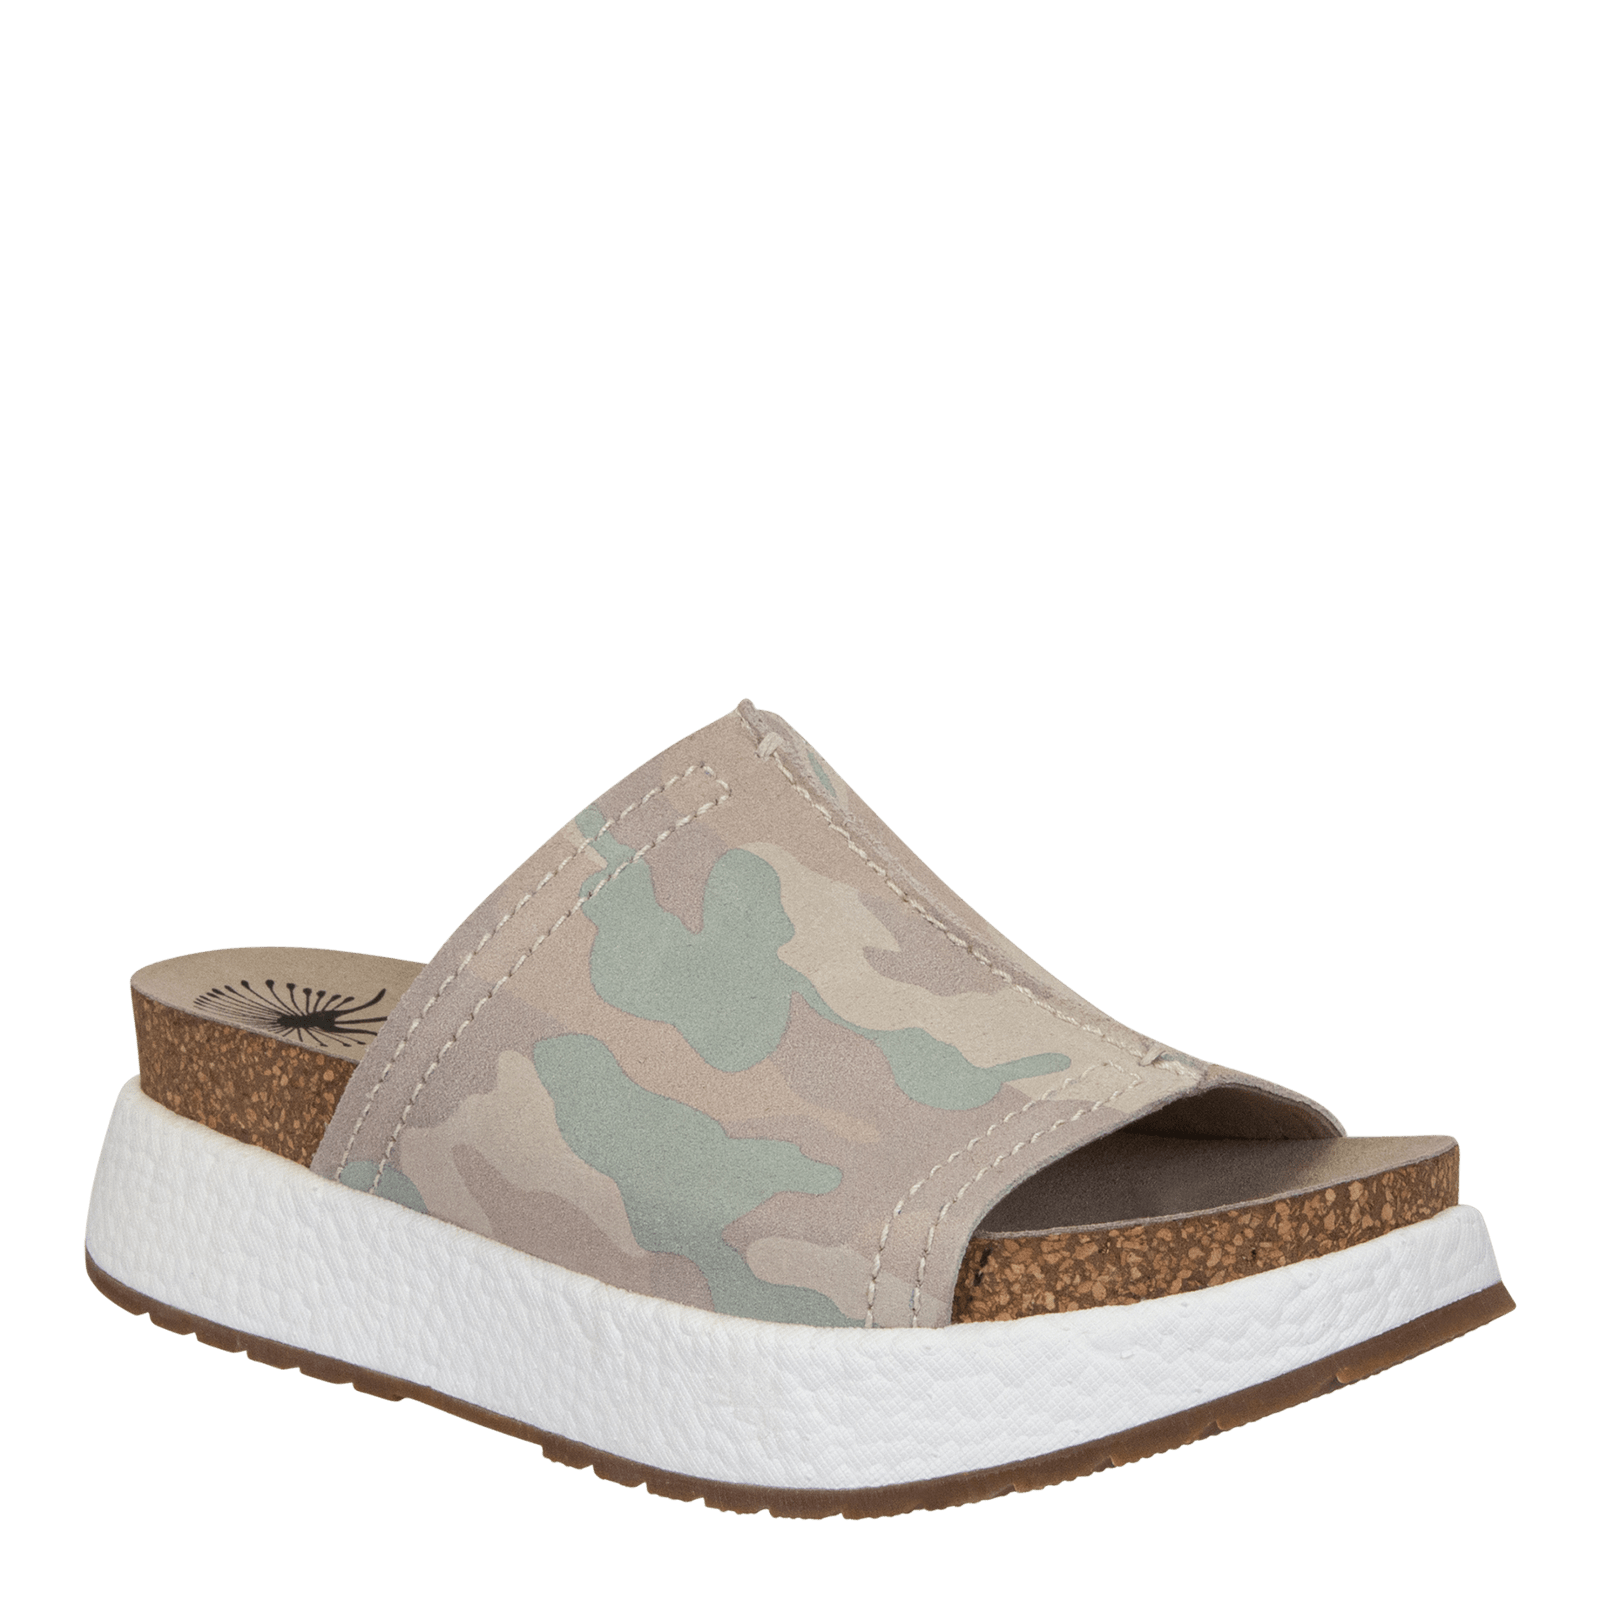 WAYSIDE in KHAKI CAMO Platform Slides - OTBT shoes